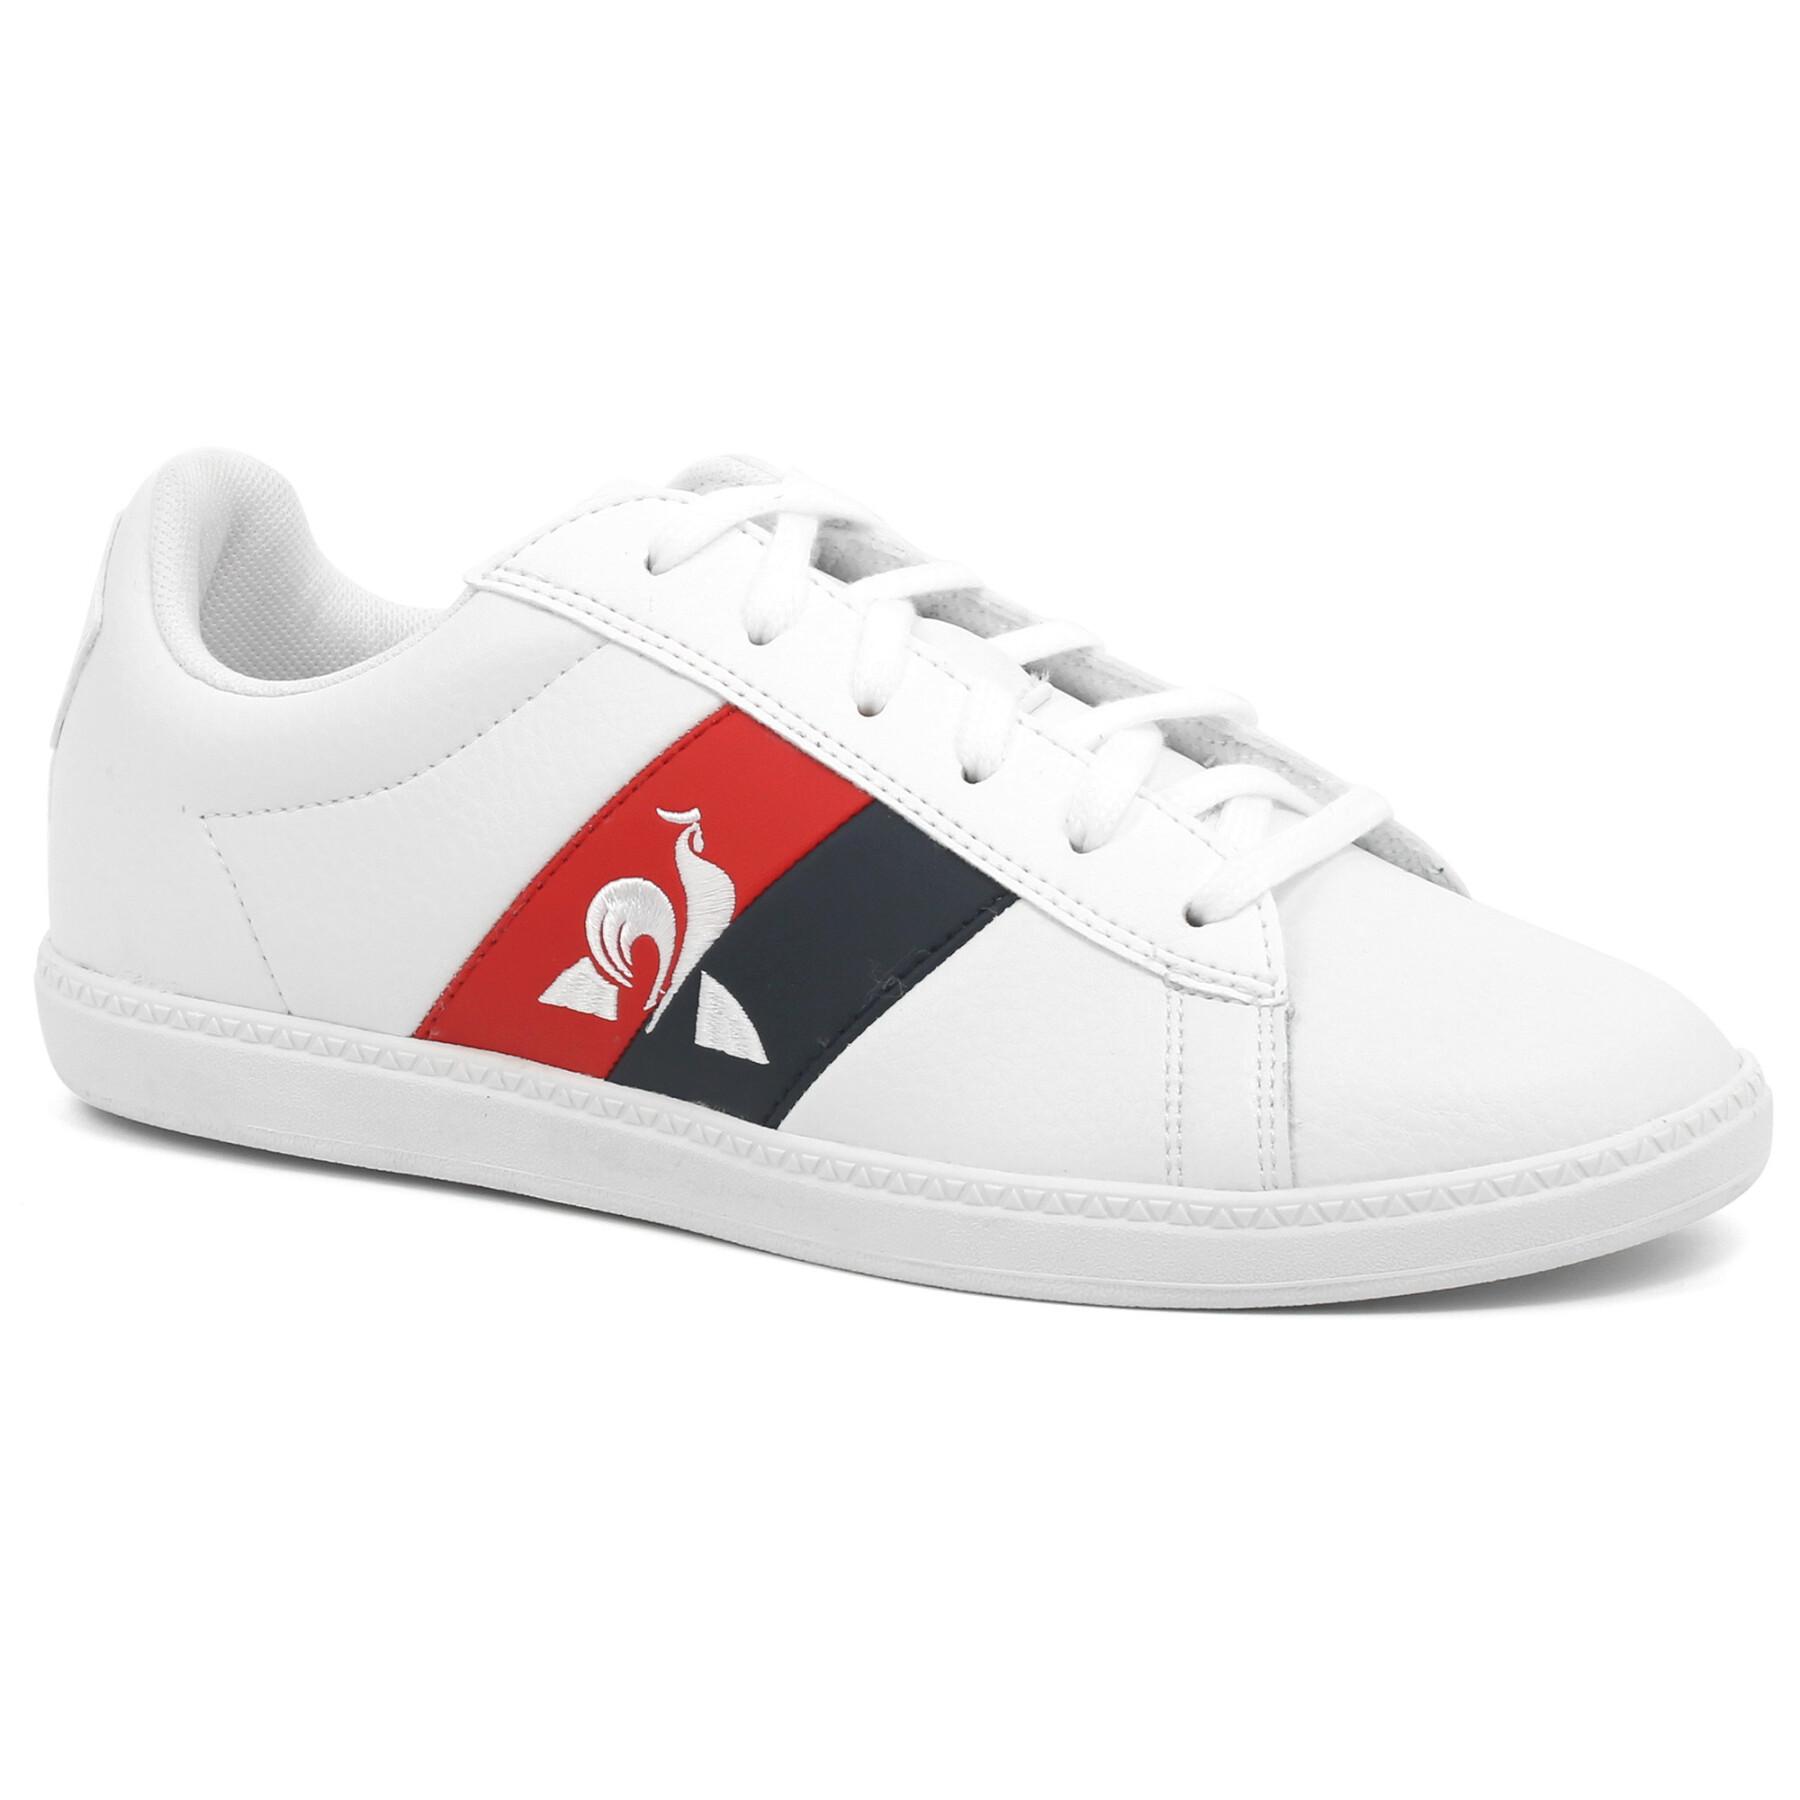 Children's sneakers Le Coq Sportif Courtclassic gs flag